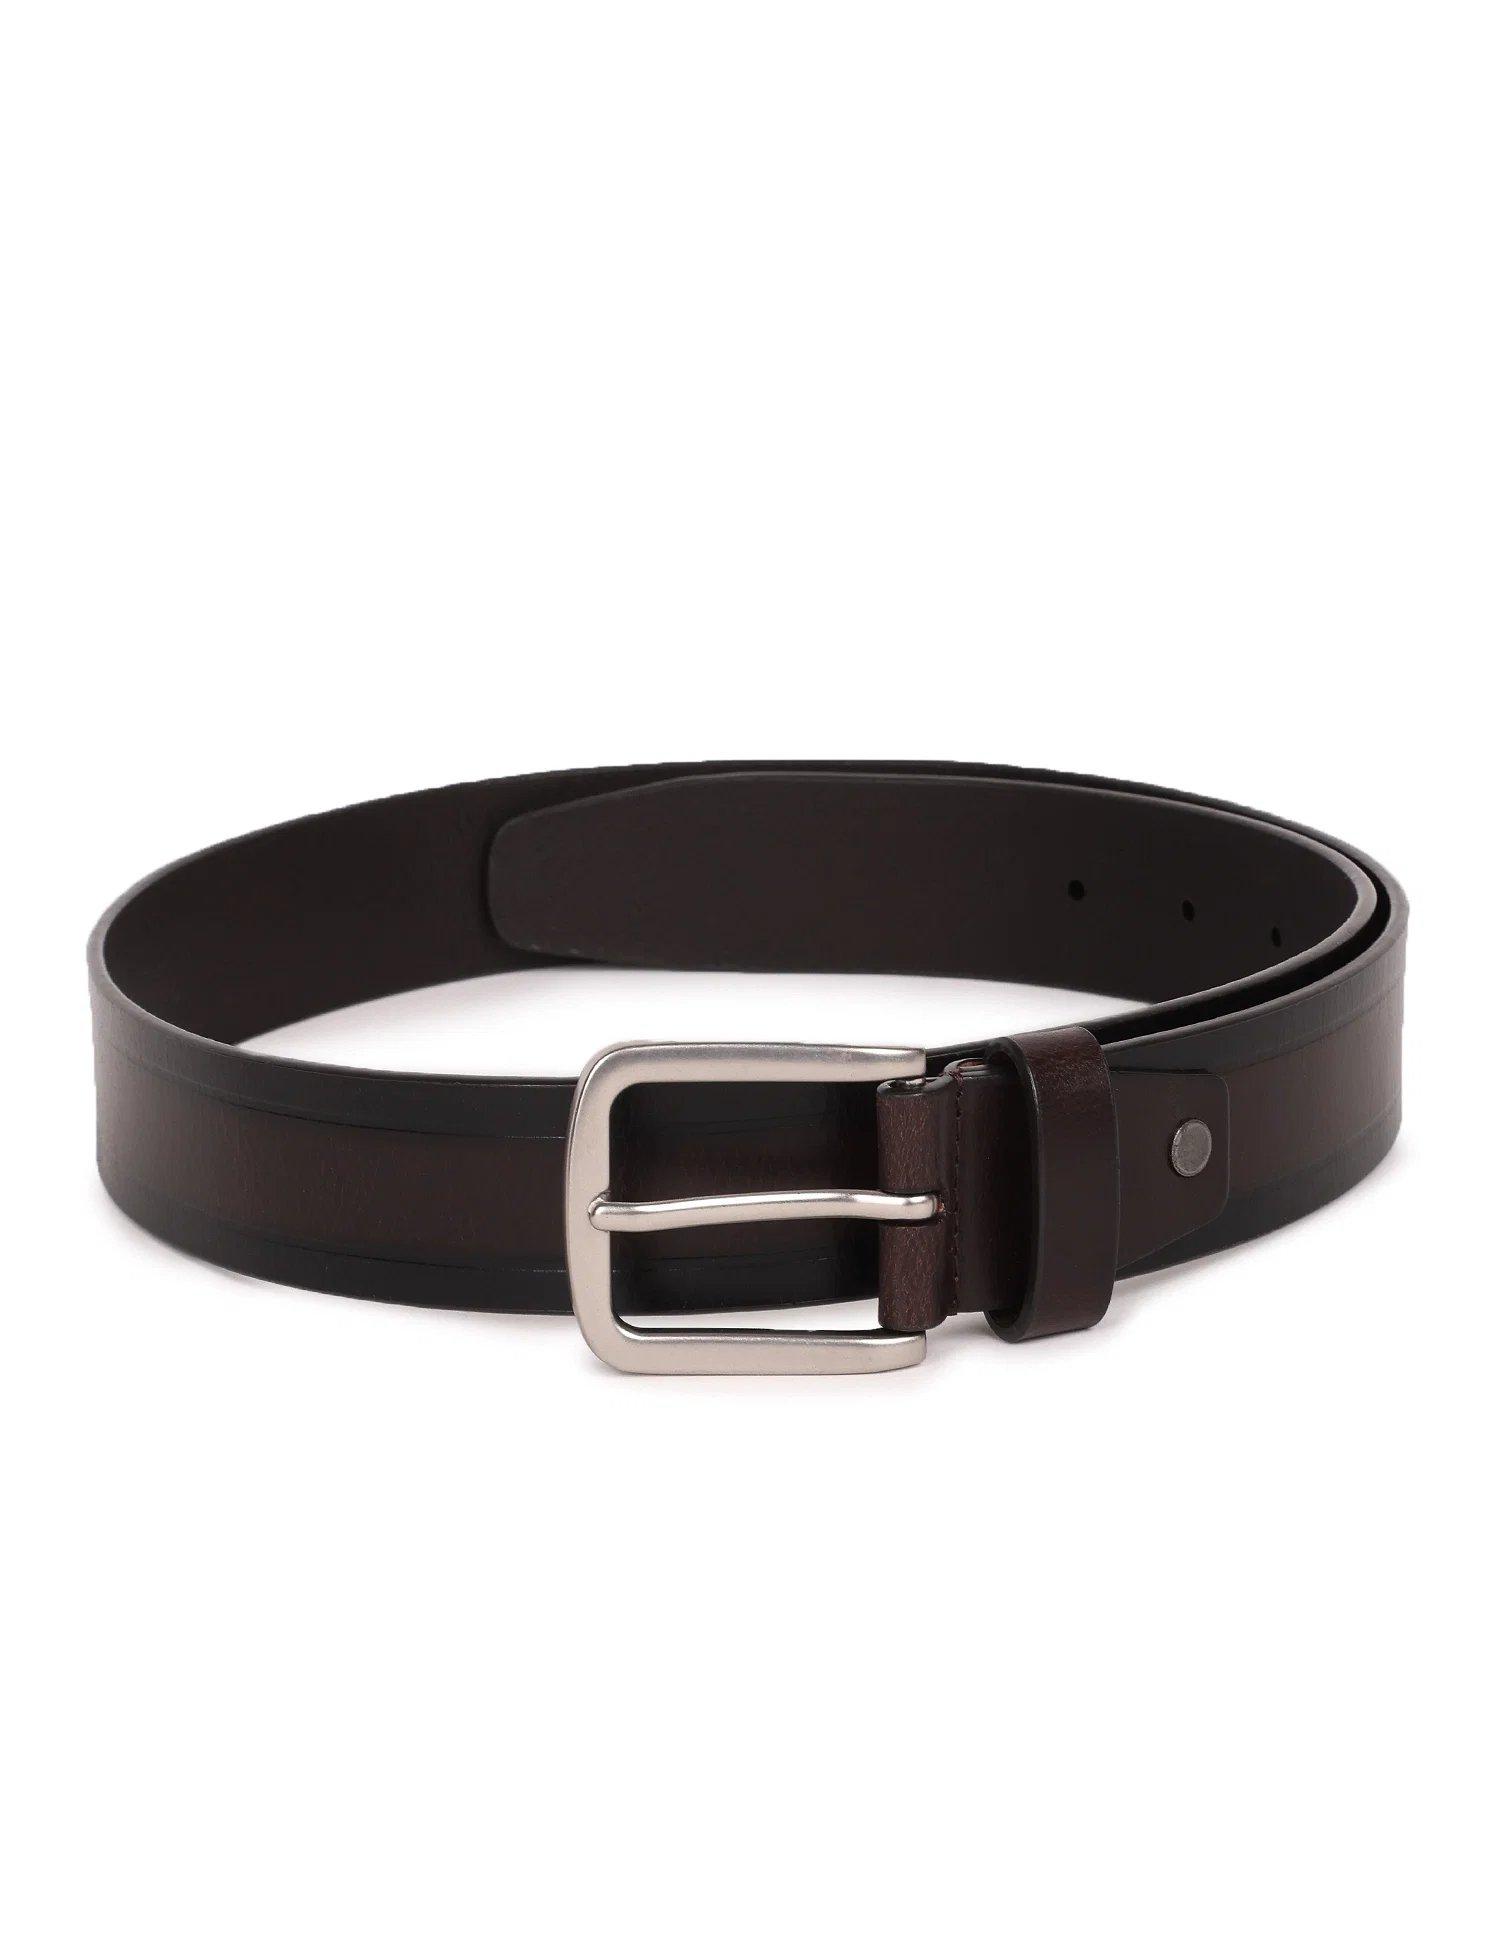 Metallic Buckle Solid Black Leather Belt 